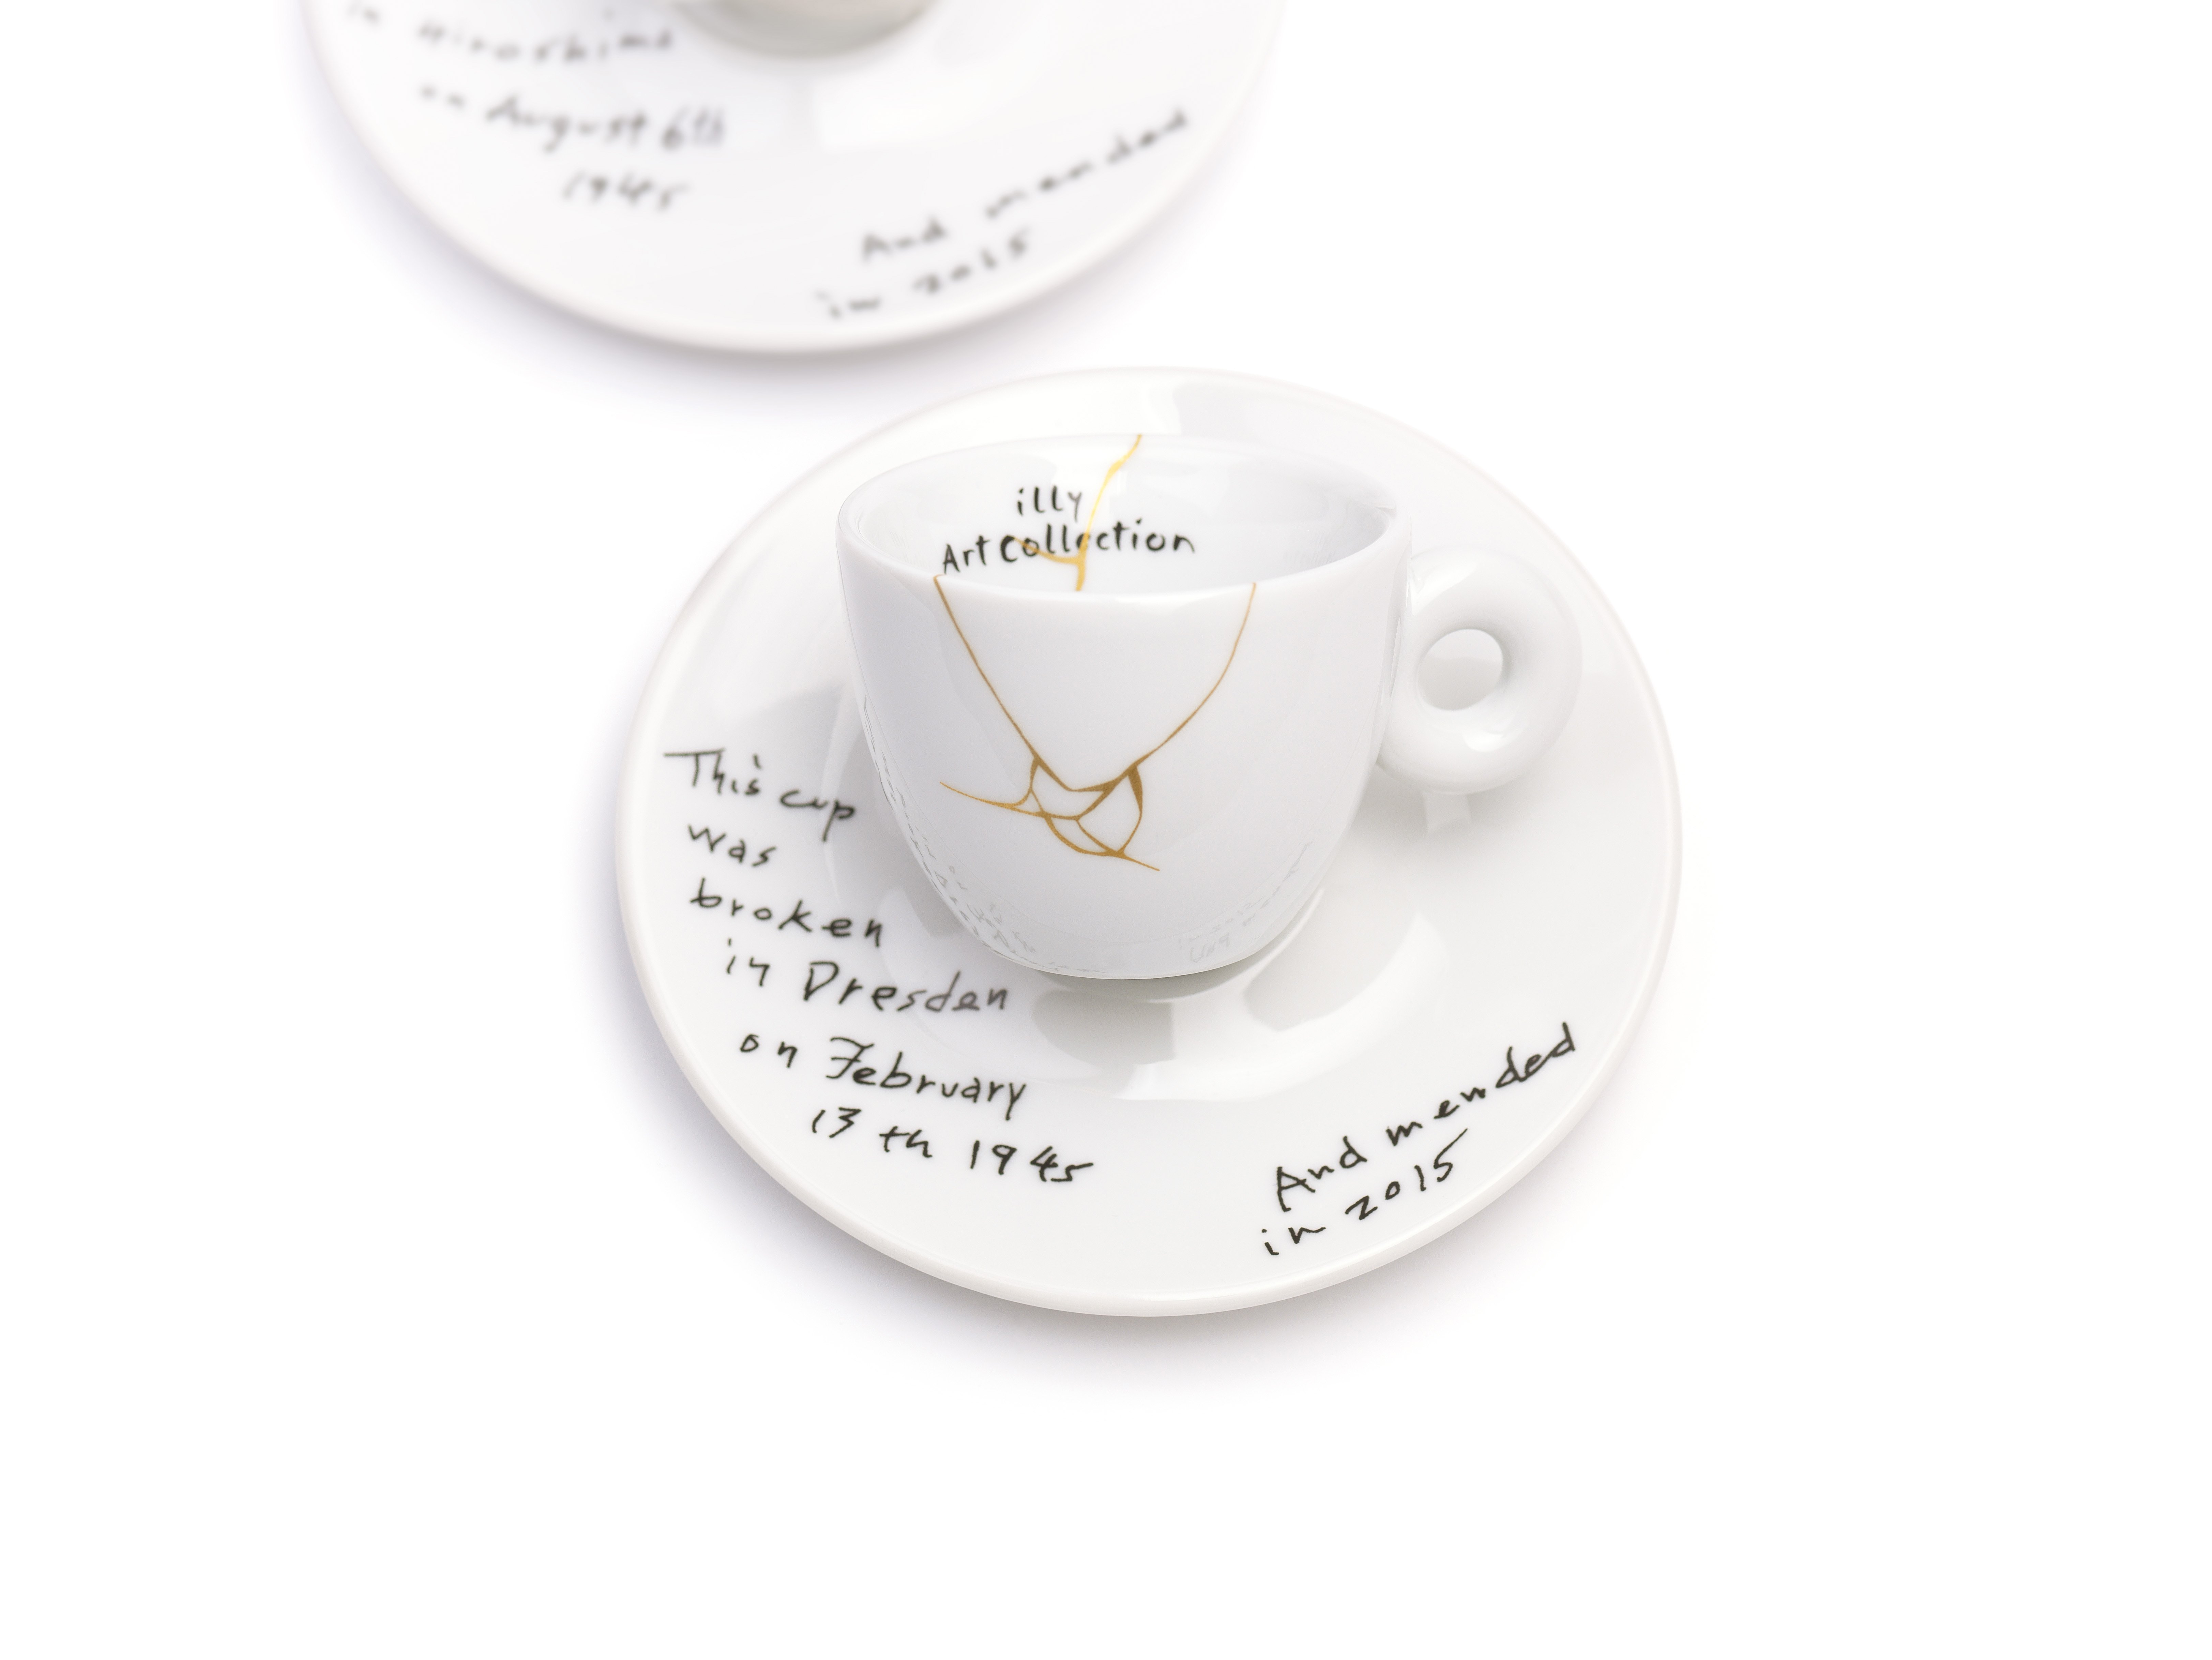 illy Art Collection espresso Yoko Ono